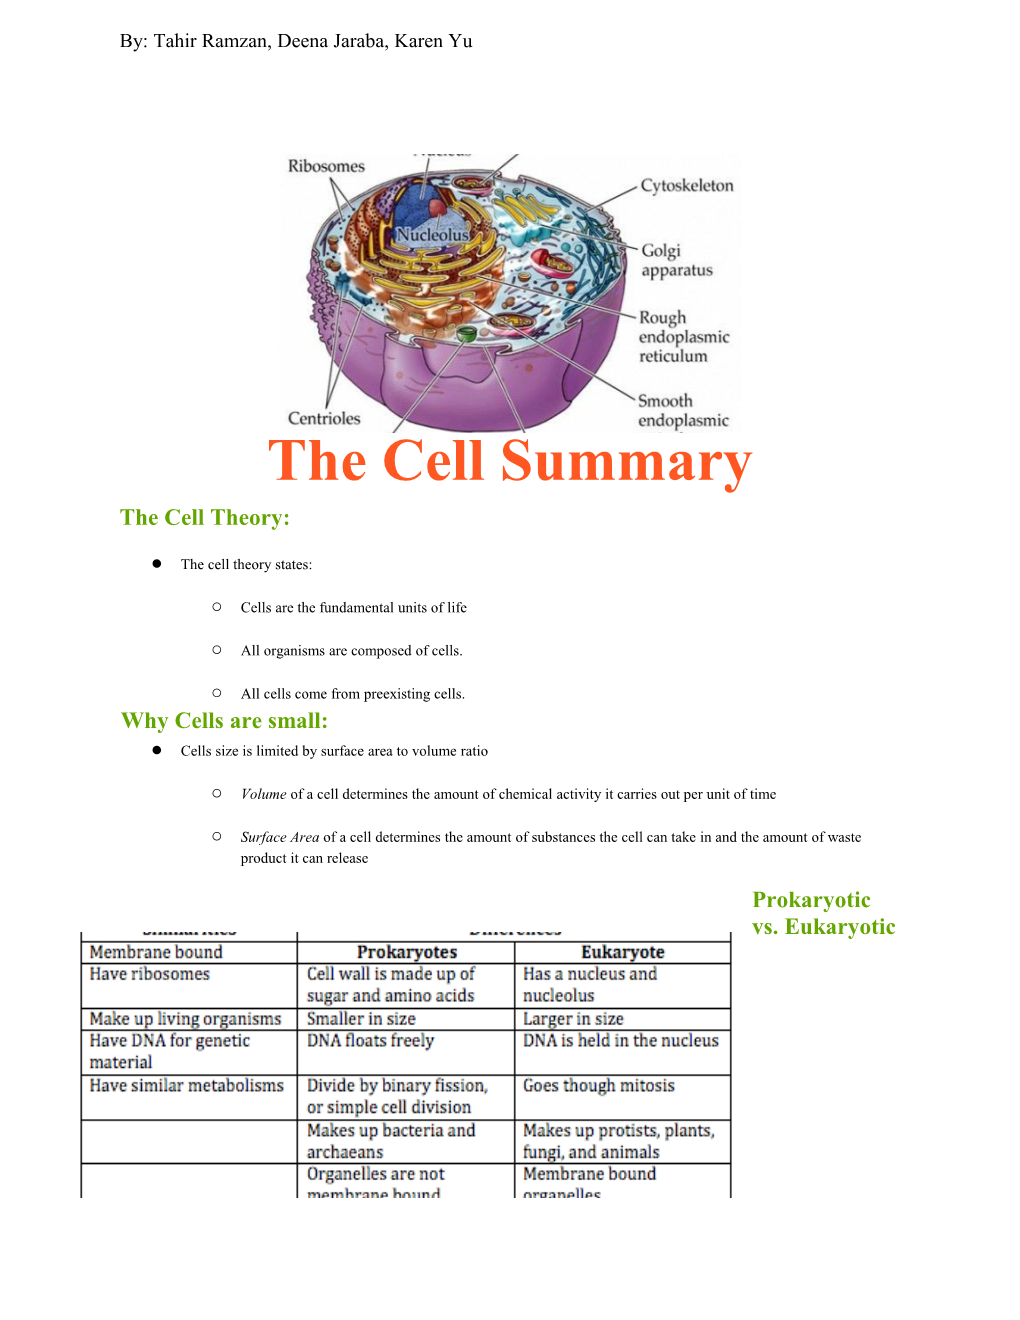 The Cell Summary